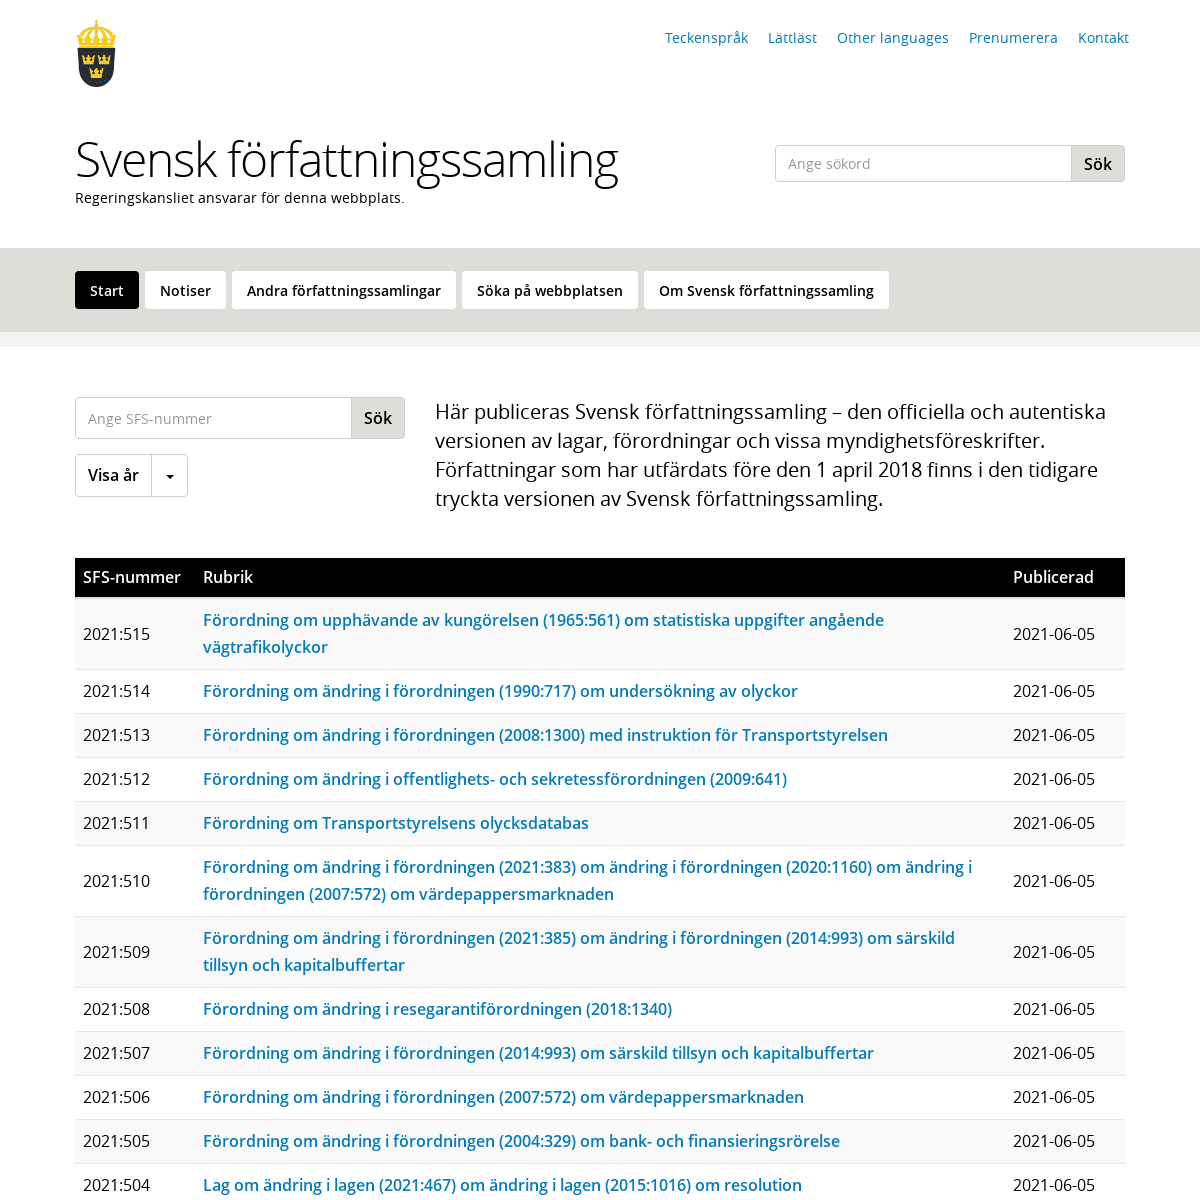 A complete backup of https://svenskforfattningssamling.se